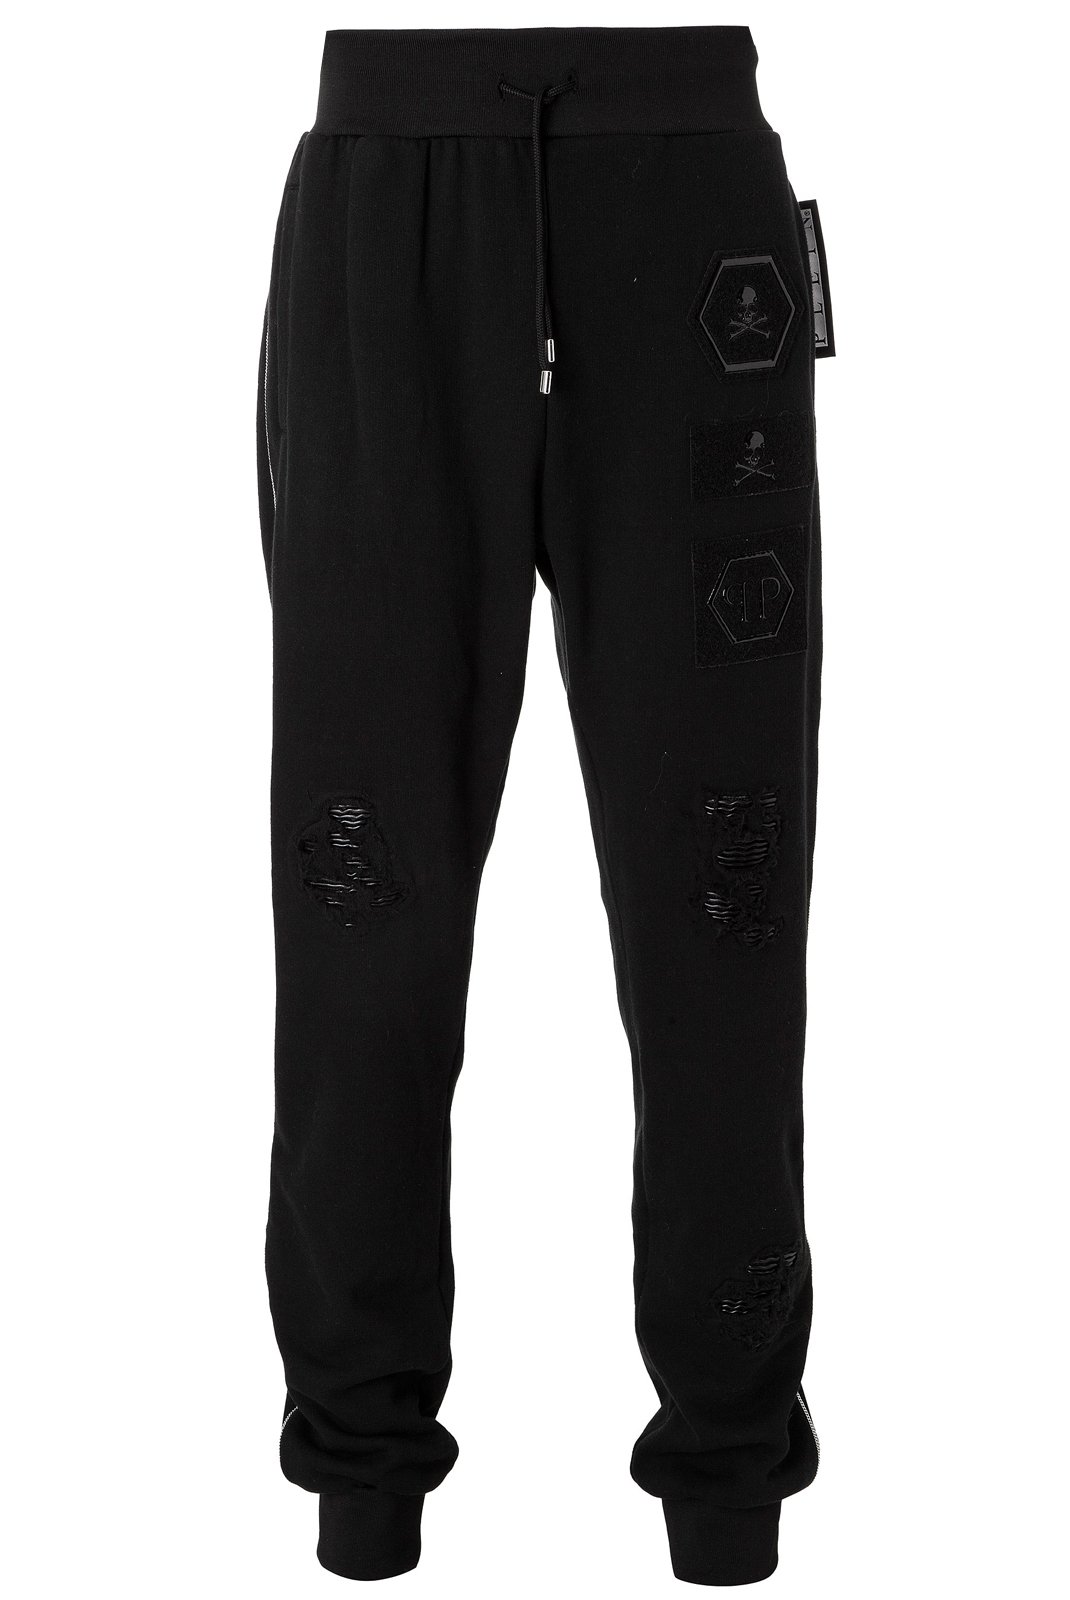 Pantalons sport/streetwear  Philipp plein MJT0360 02 BLACK